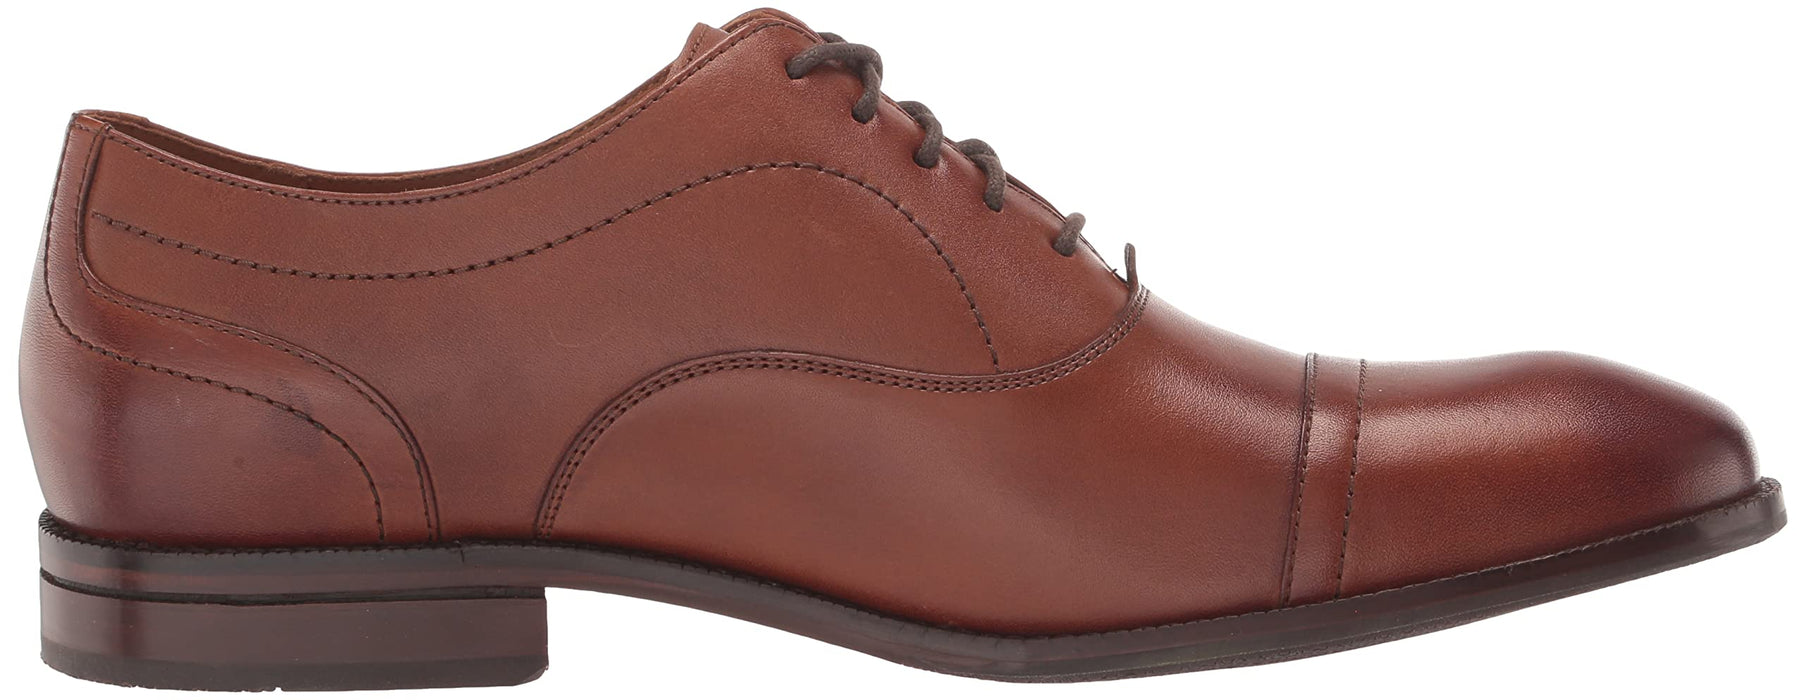 Cole Haan Men's Sawyer Cap Toe Leather Oxford Shoes